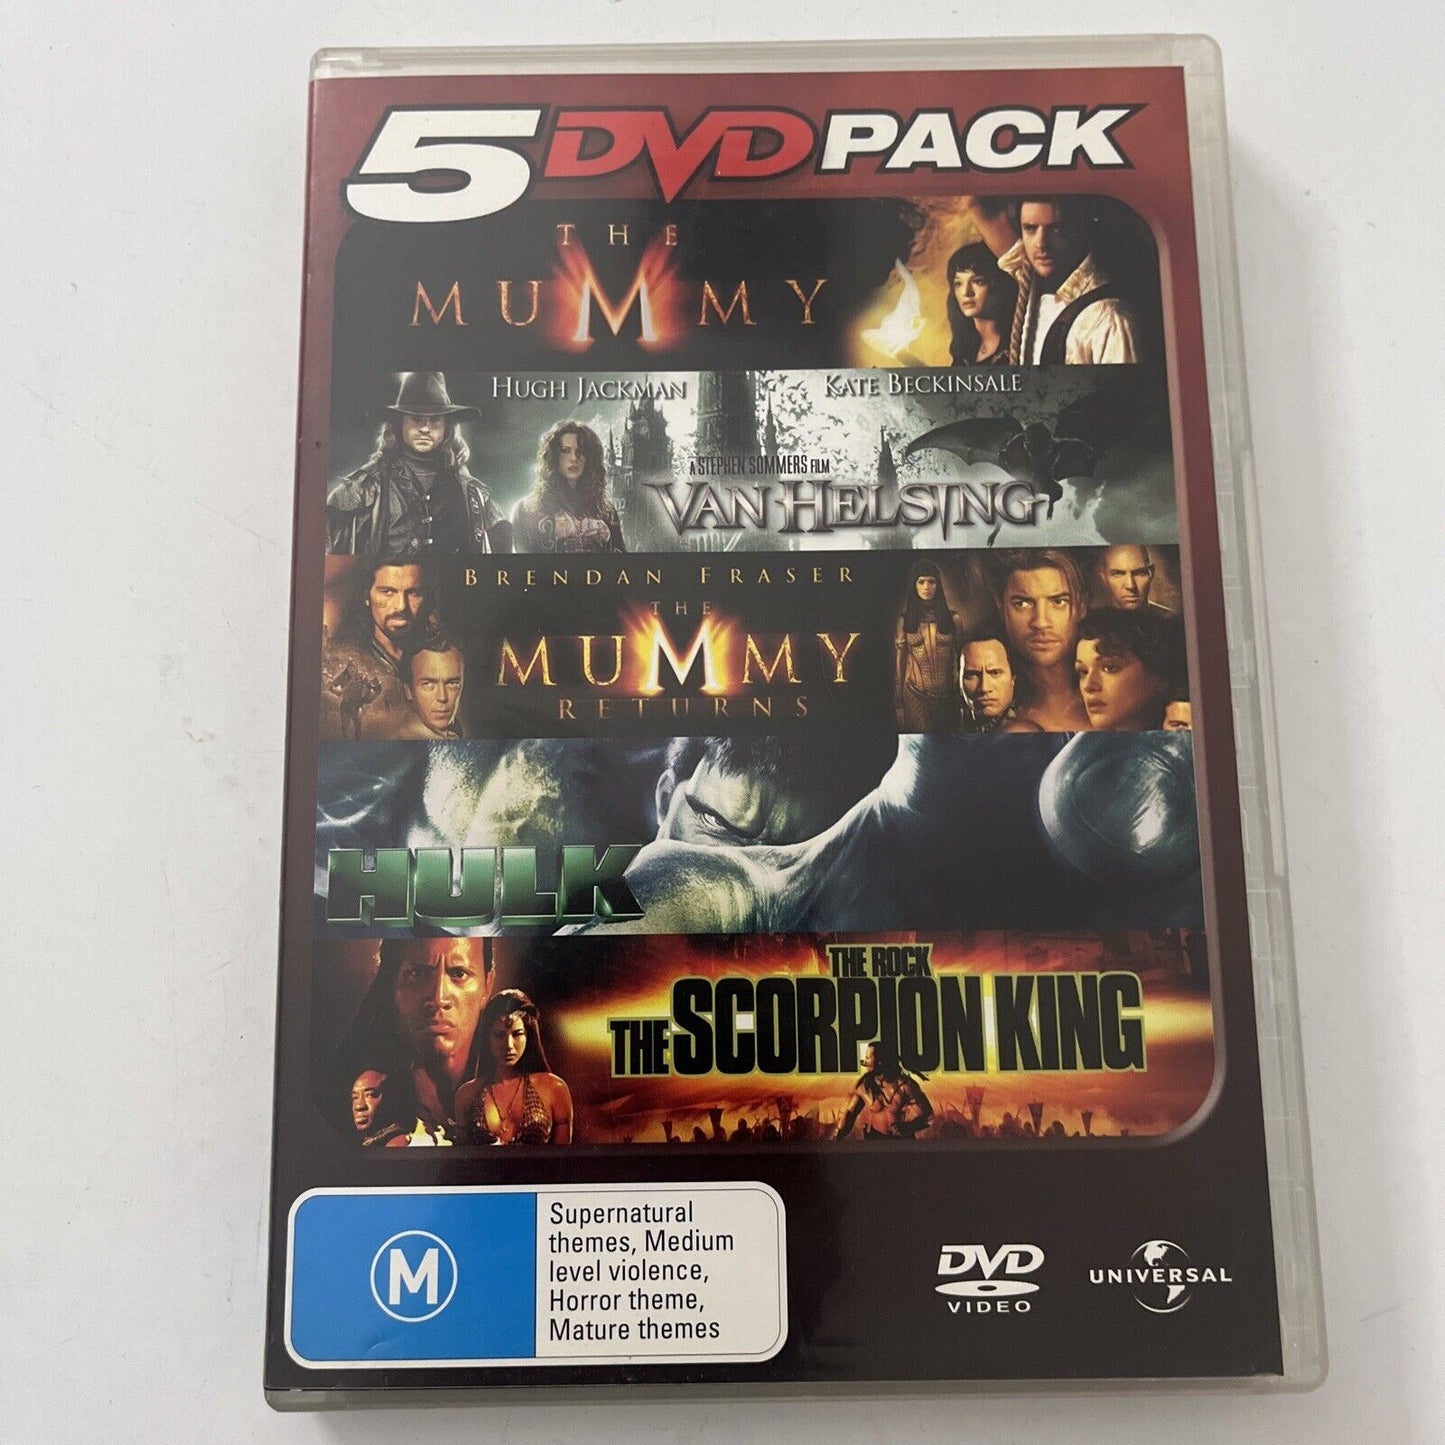 The Mummy / Van Helsing / Mummy Returns /Van Helsing / Hulk / Scorpion King DVD